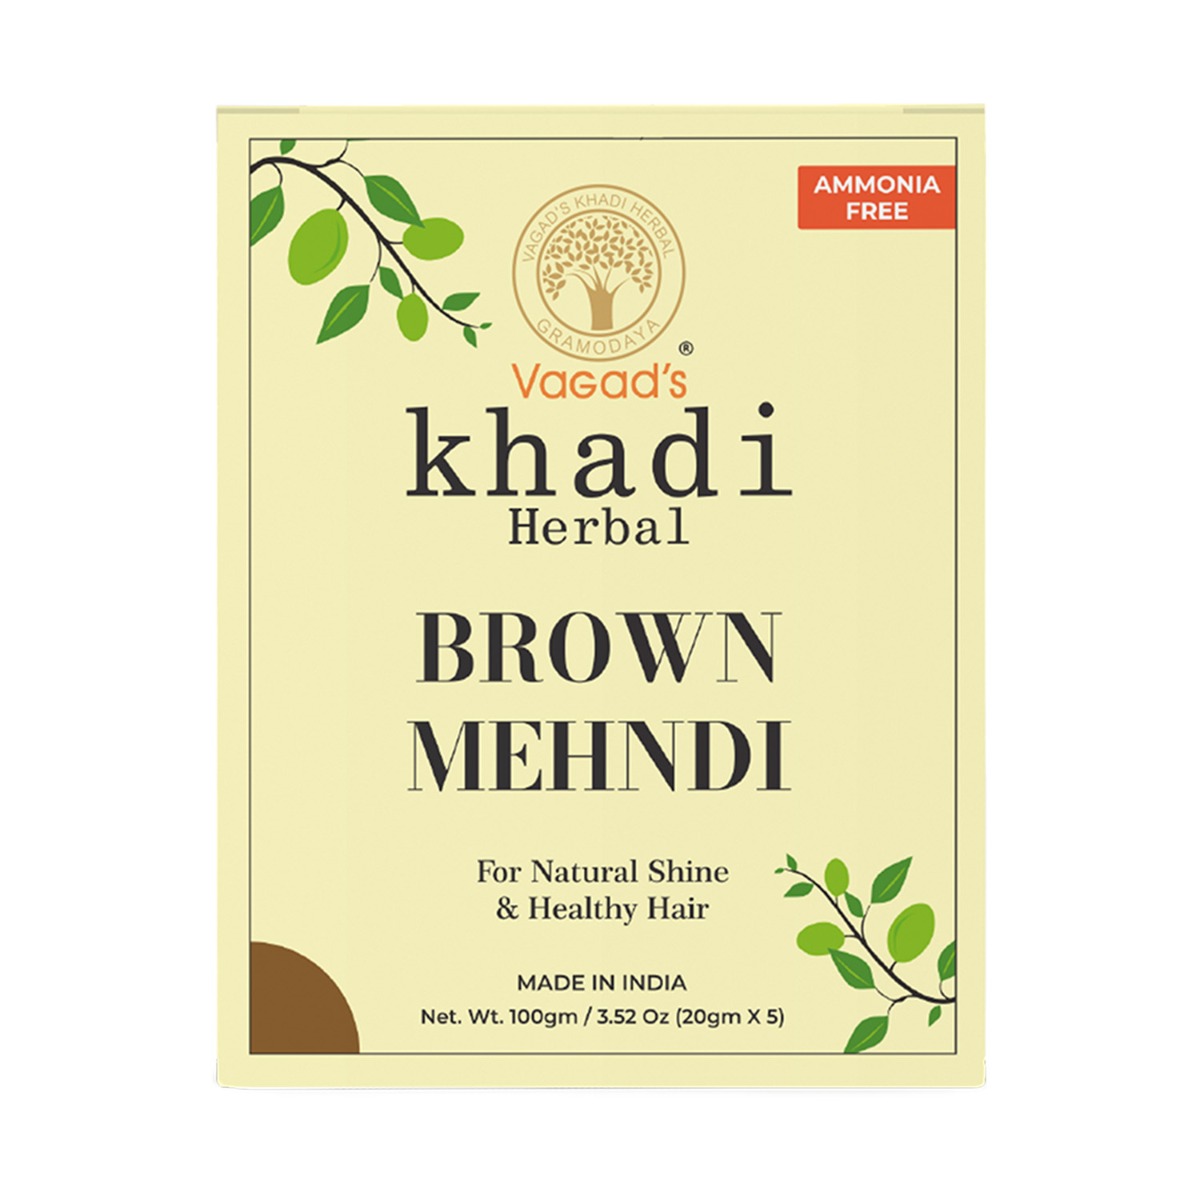 Vagad's Khadi Brown Mehndi, 100gm